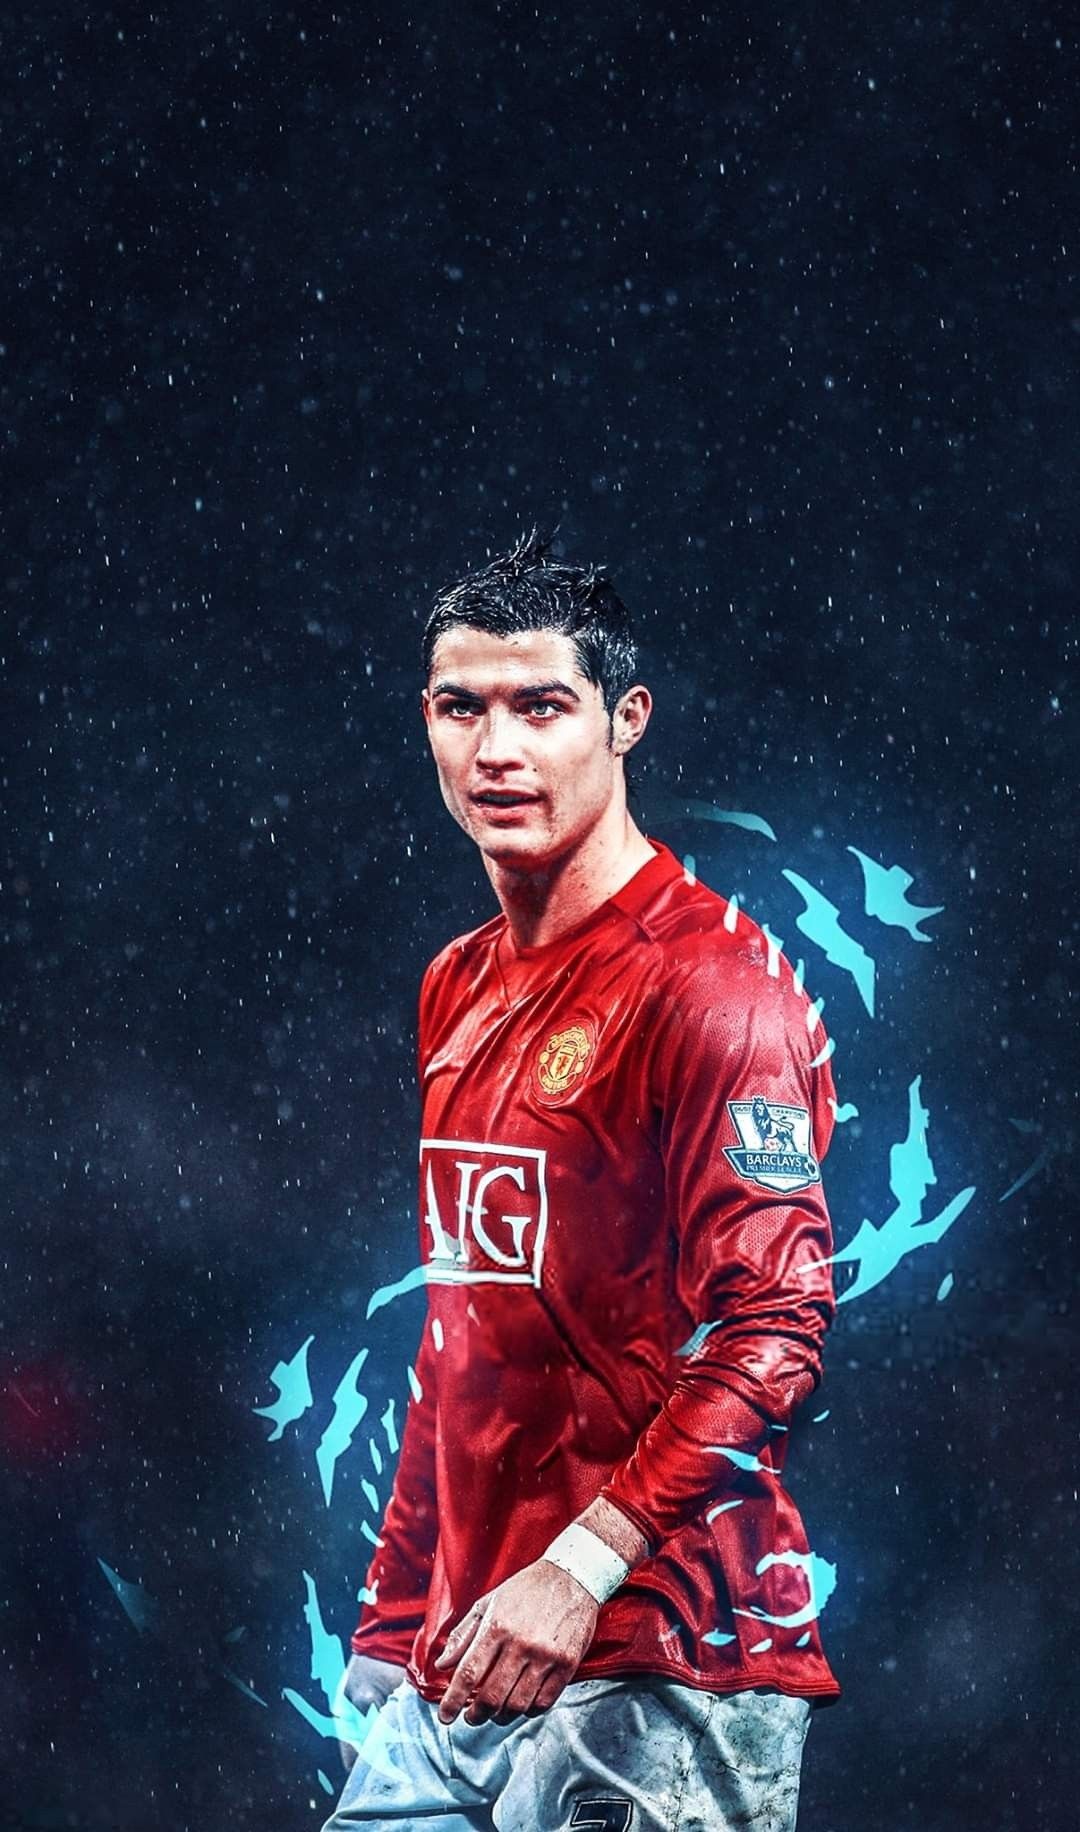 32+] Cristiano Ronaldo Manchester United Wallpapers - WallpaperSafari